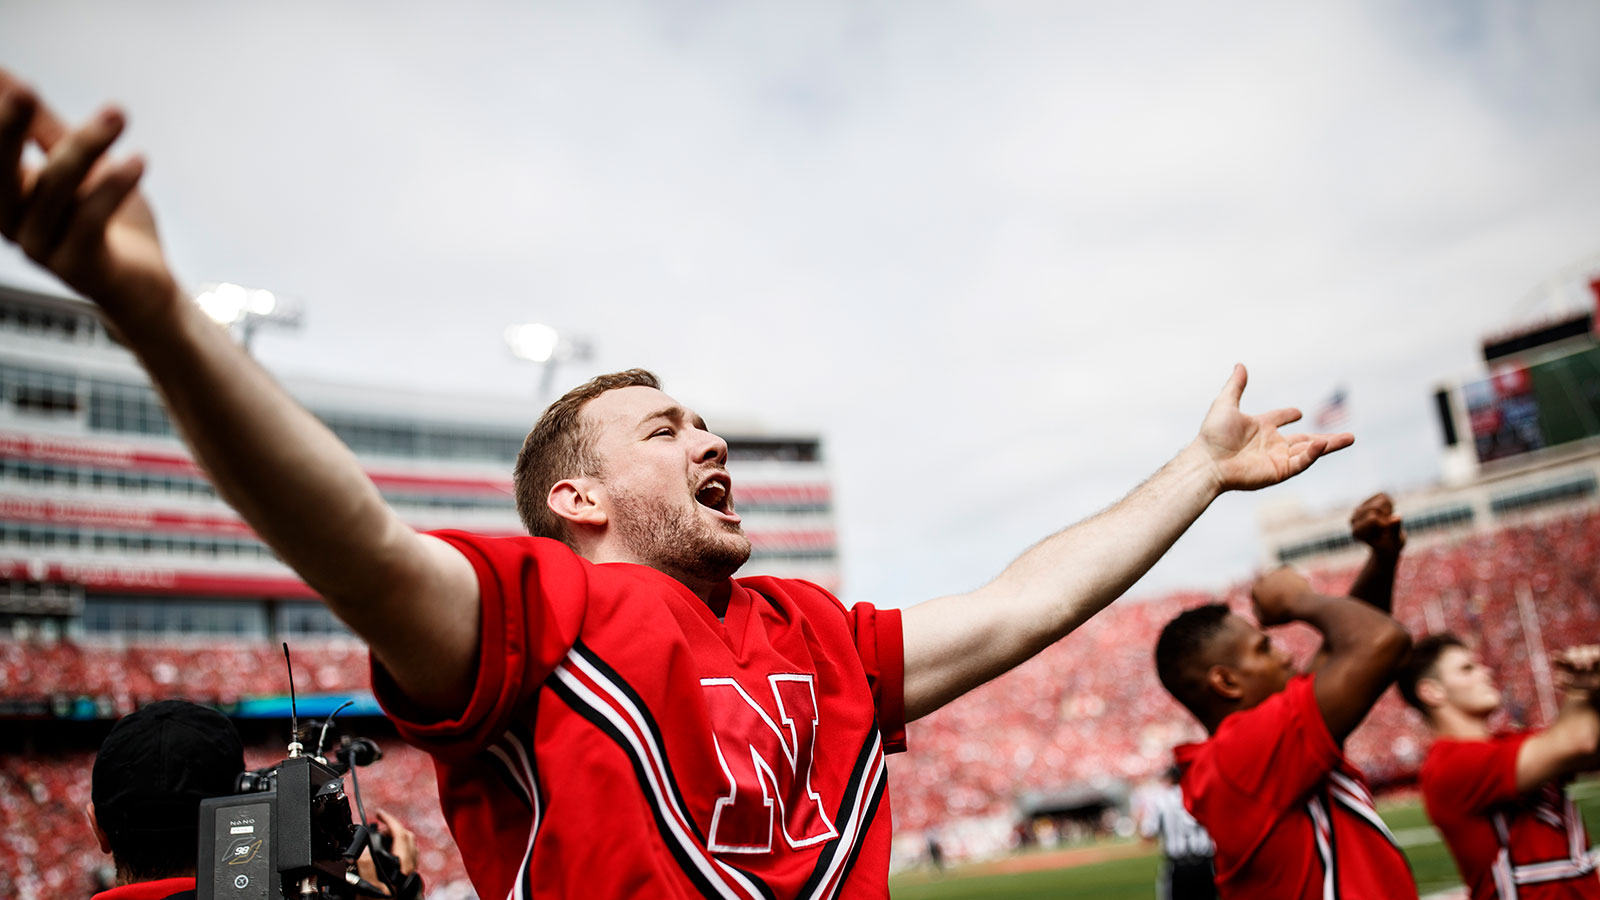 Jake Jundt pumping up the crowd during the 2019 Nebraska vs South Alabama football game.